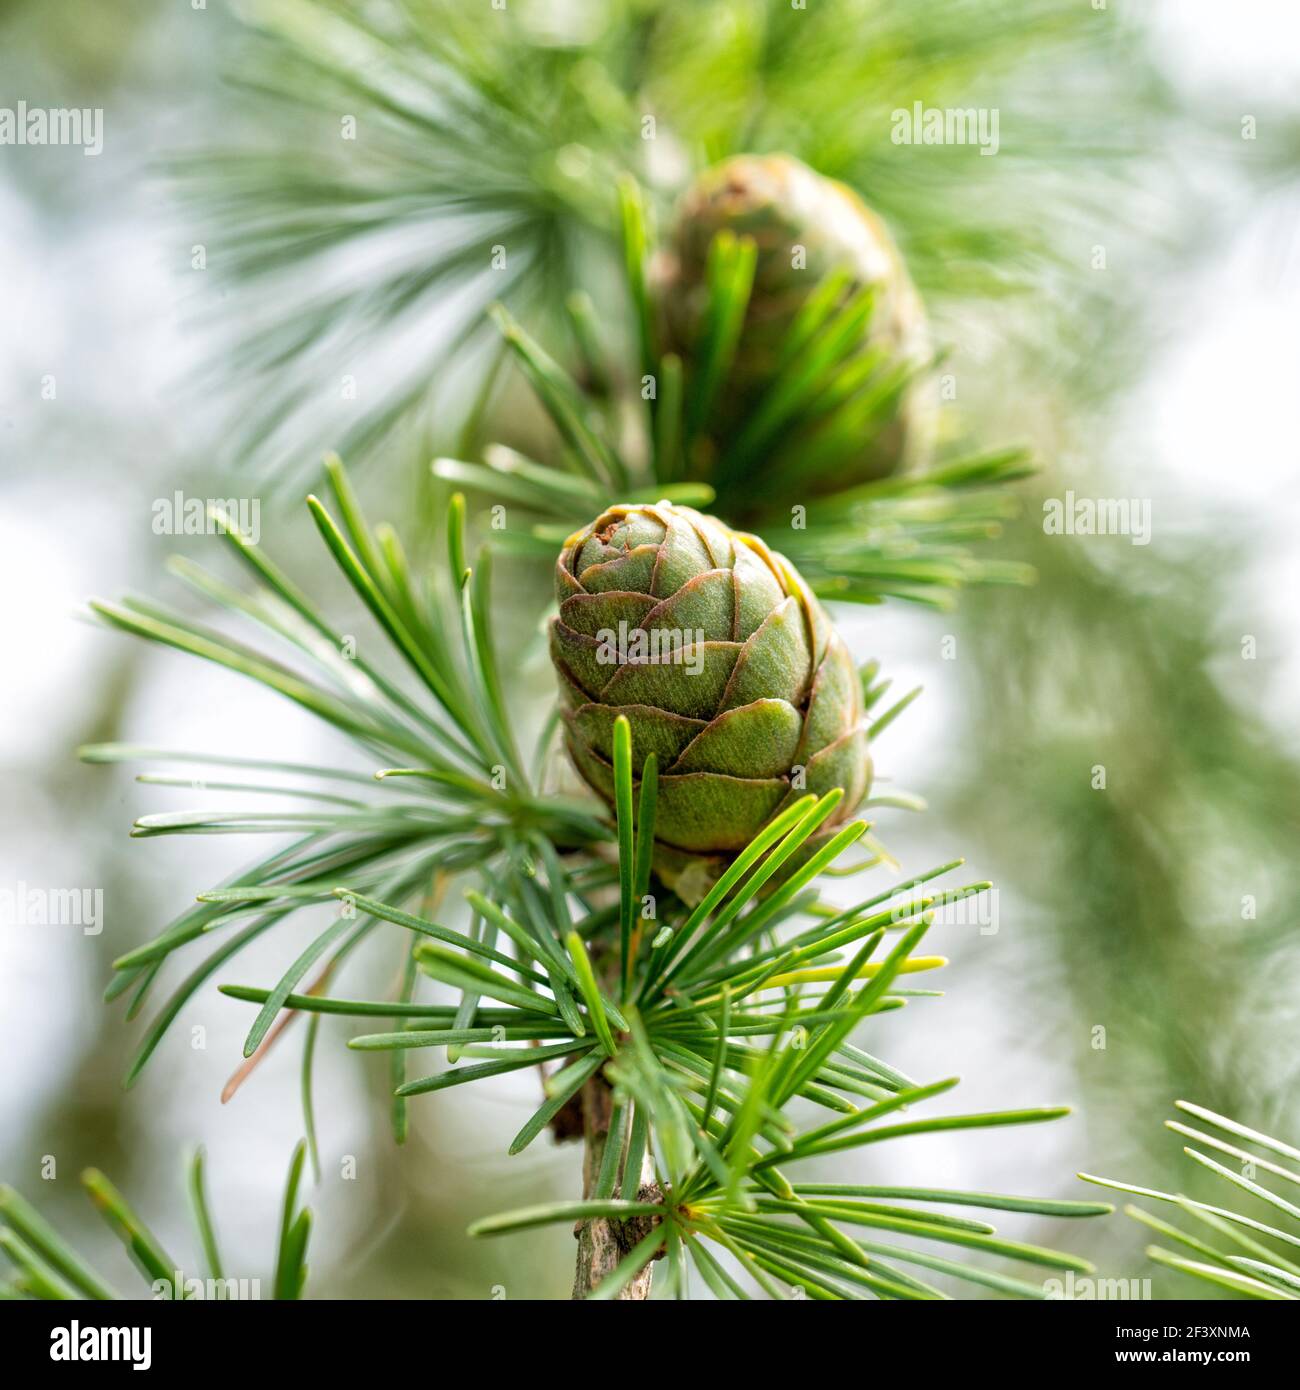 Green Cones on Larix sibirica tree close-up Stock Photo